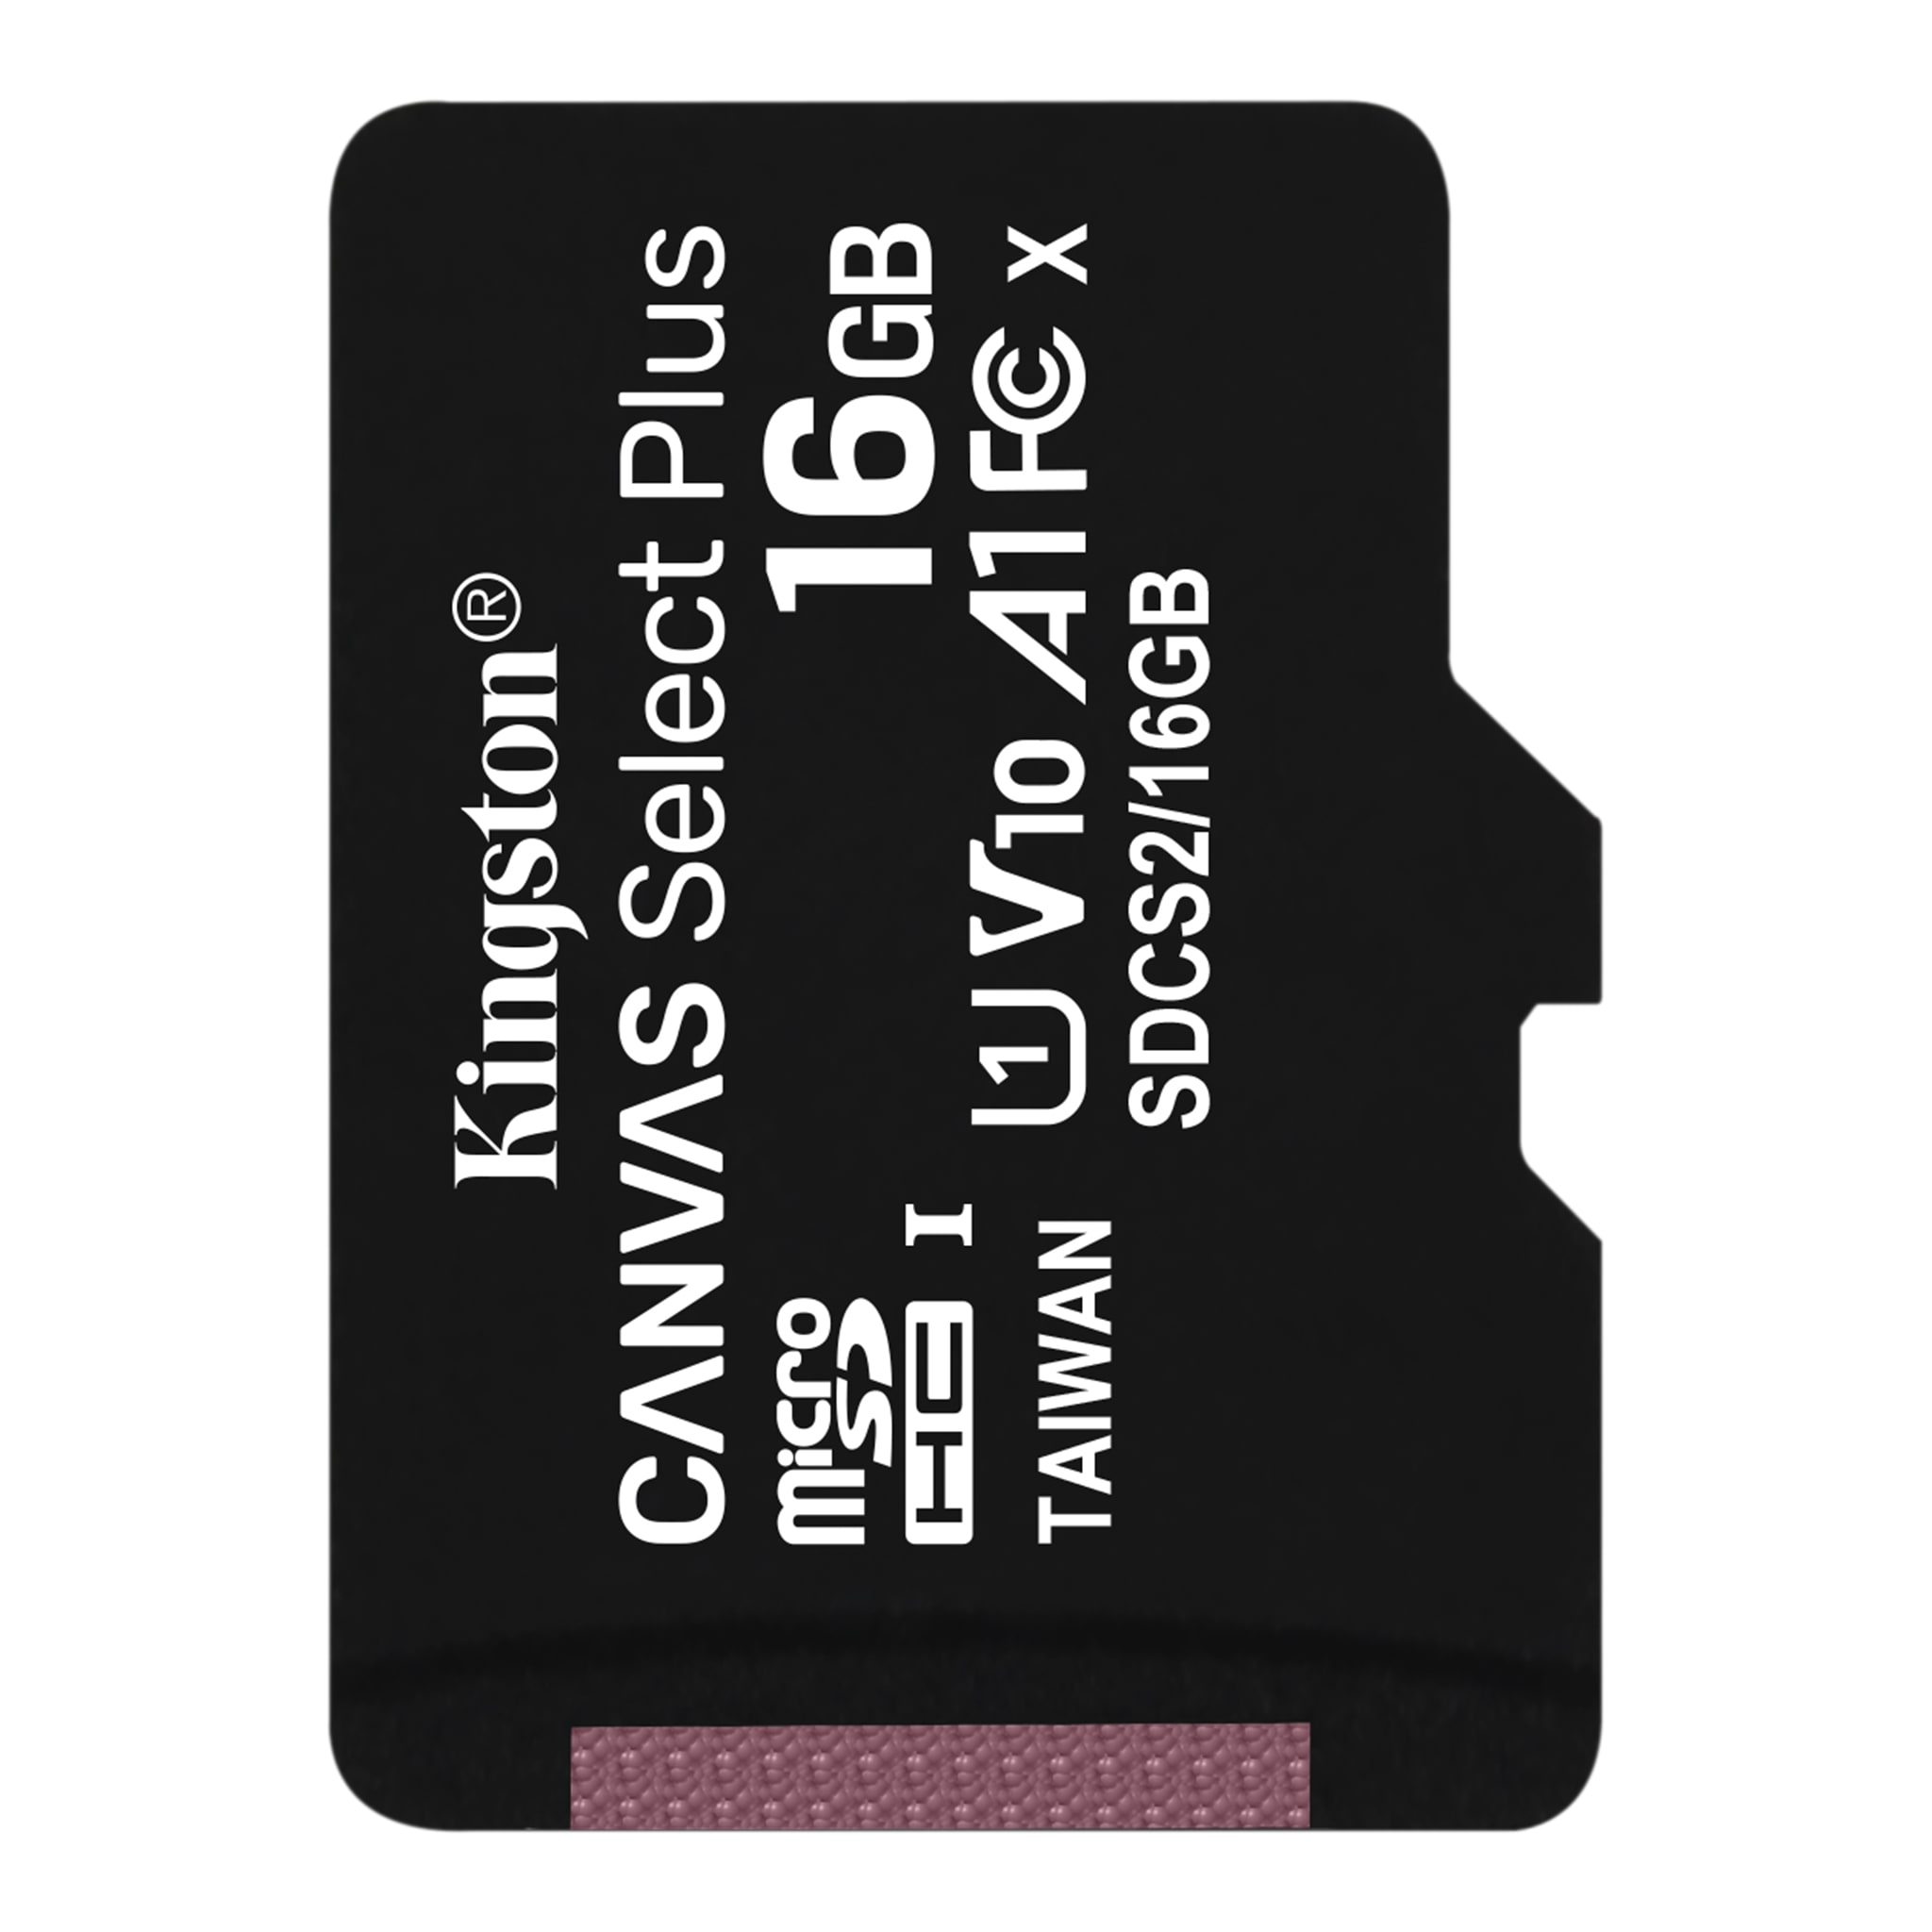 Kingston 32GB Videocon Infinium Z50 Nova MicroSDHC Canvas Select Plus Card Verified by SanFlash. 100MBs Works with Kingston 